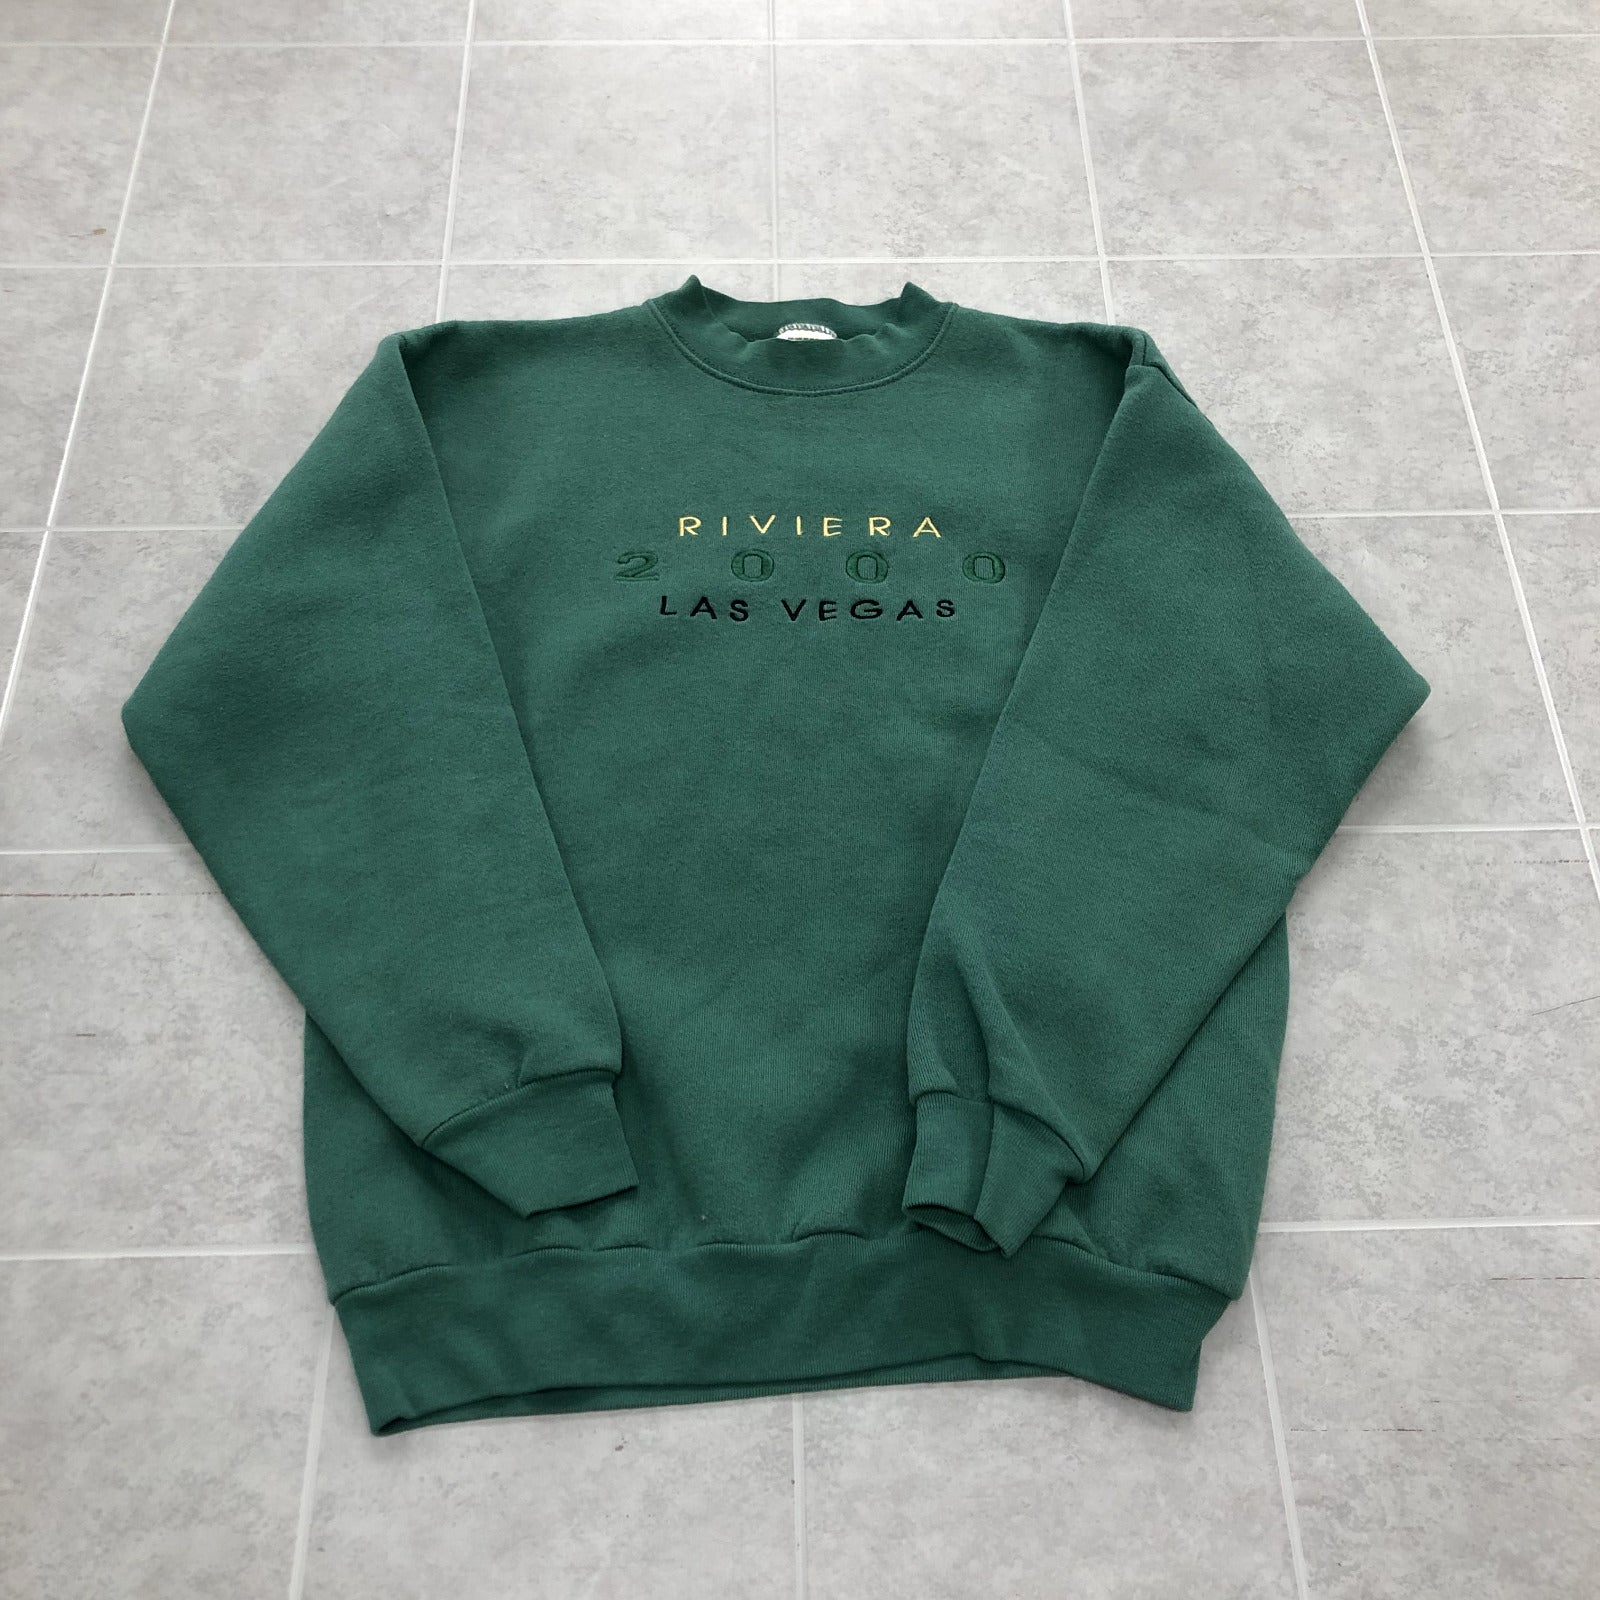 Vintage Tultex Green Crew Graphic Riviera 2000 Las Vegas Sweatshirt Adult Size M